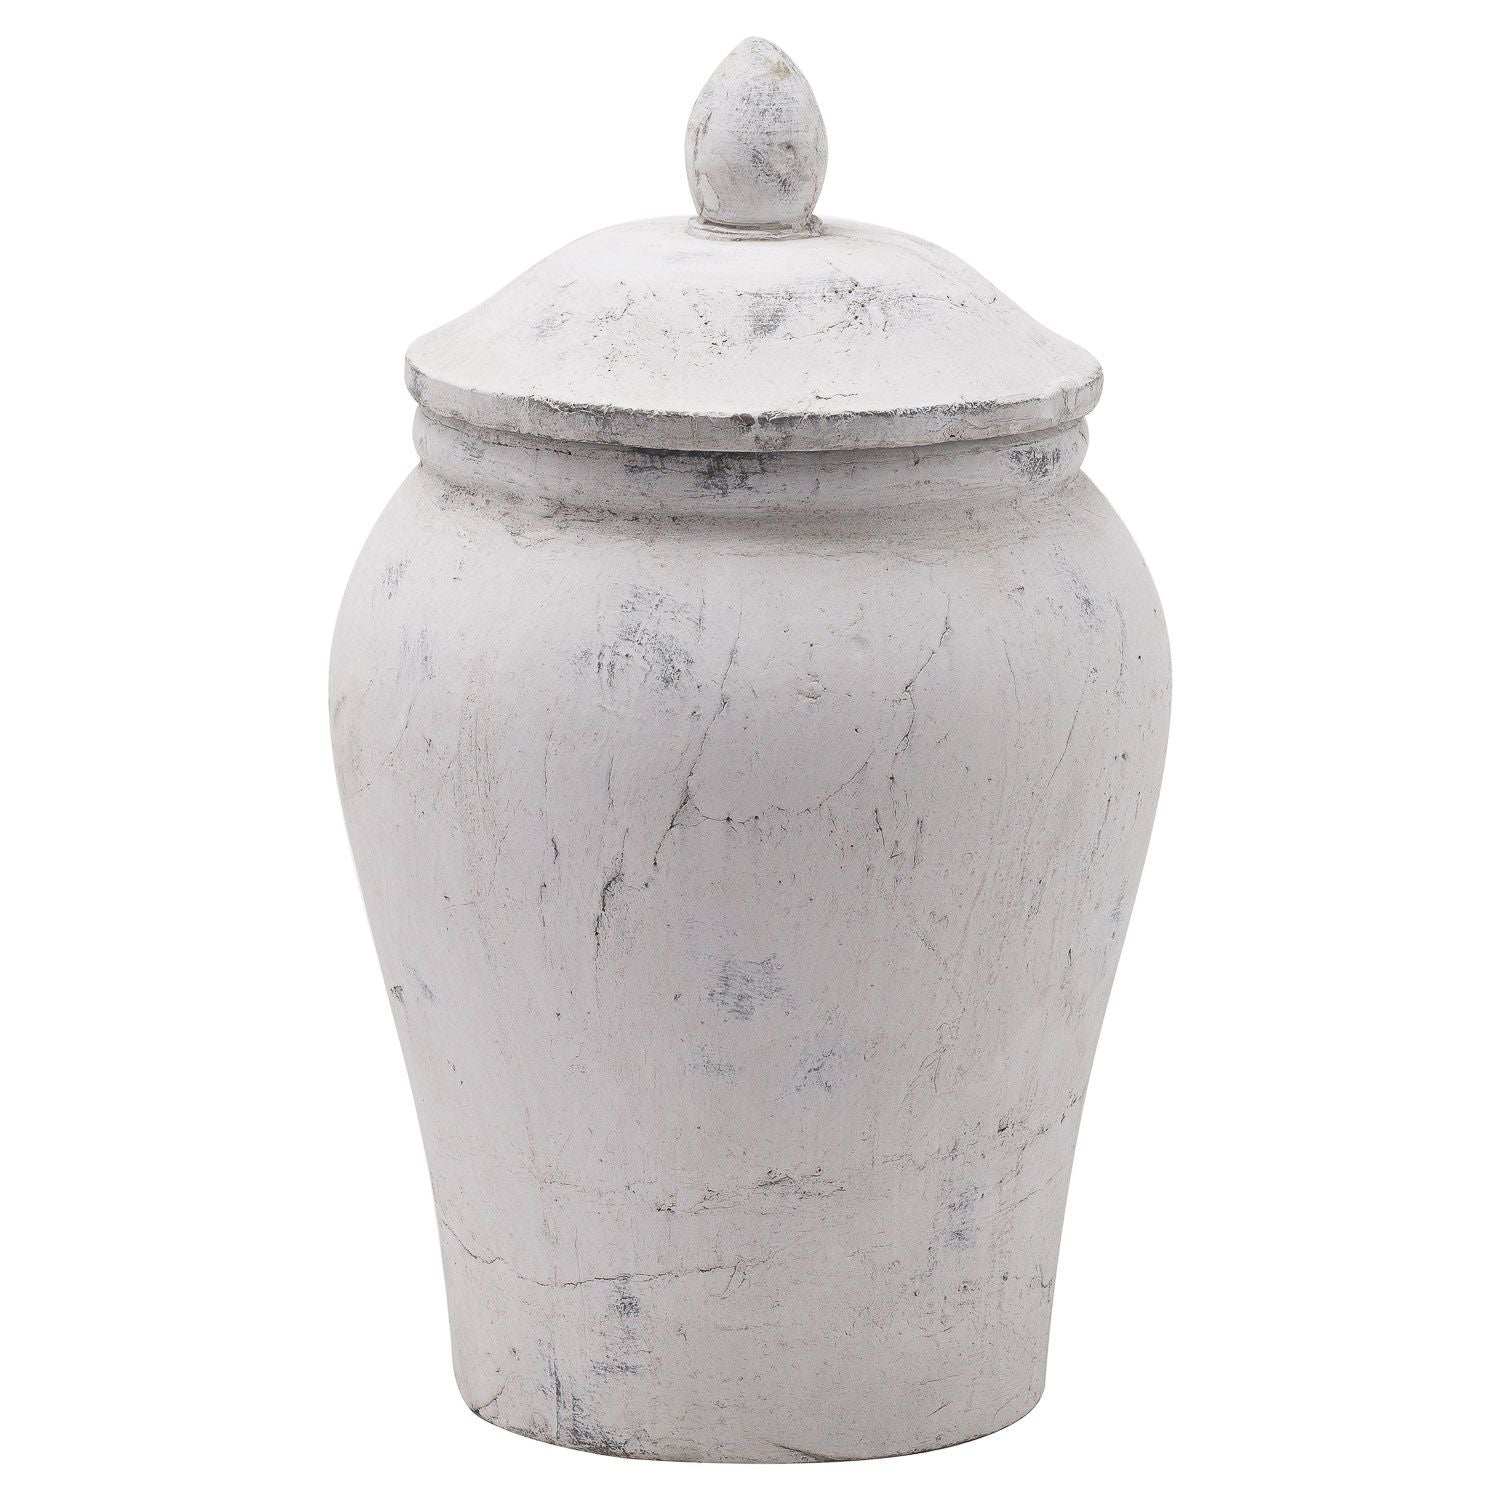 Kitchen Jar and Pot in stone coloured ceramic